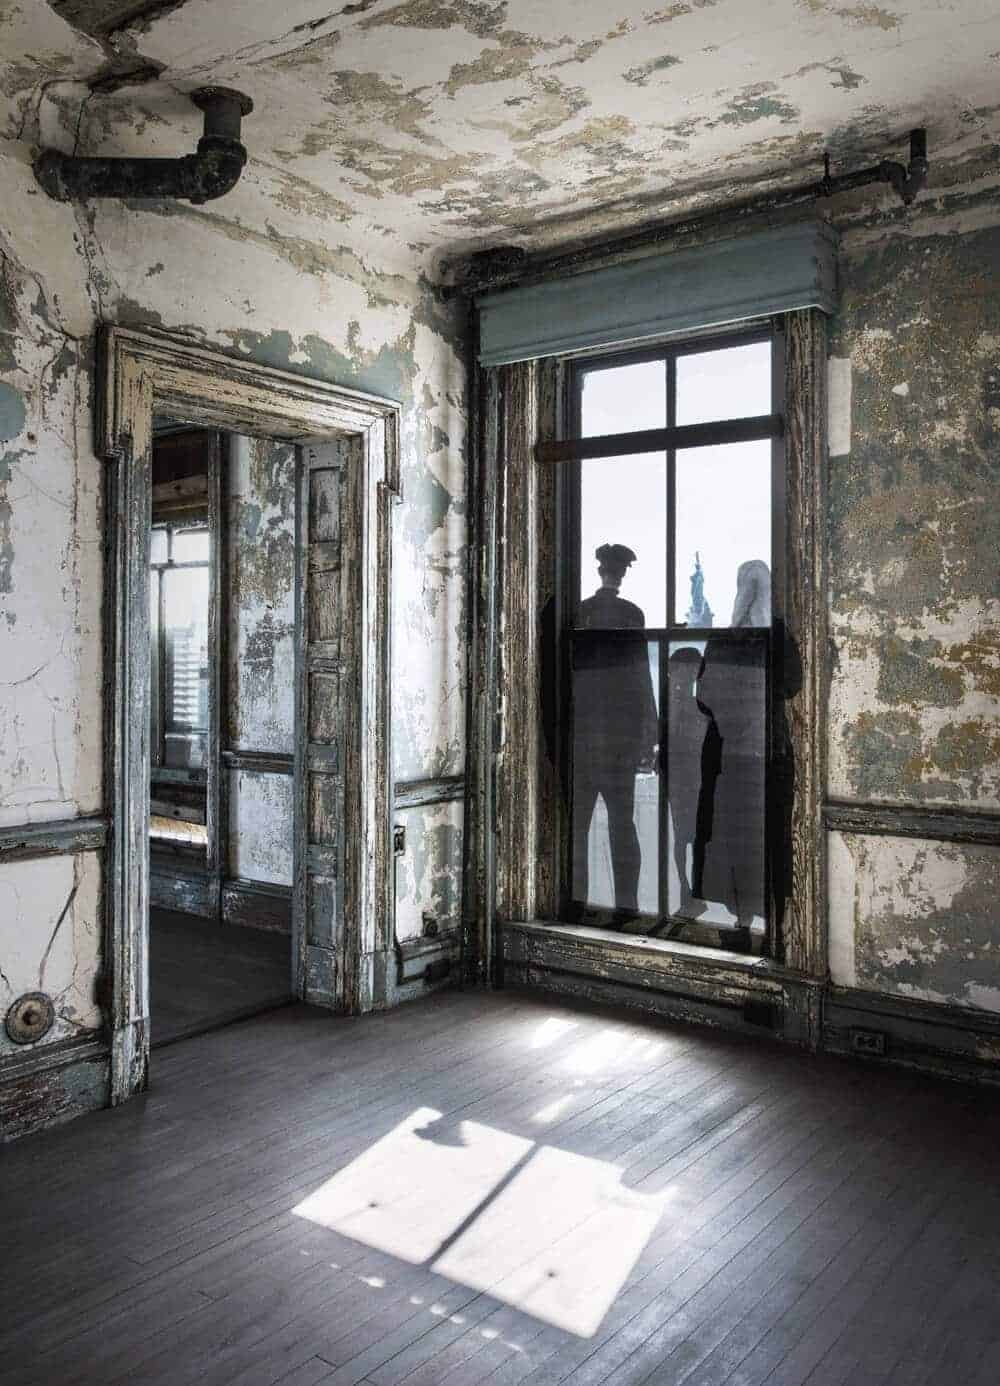 fotograaf JR exposeert op Ellis Island